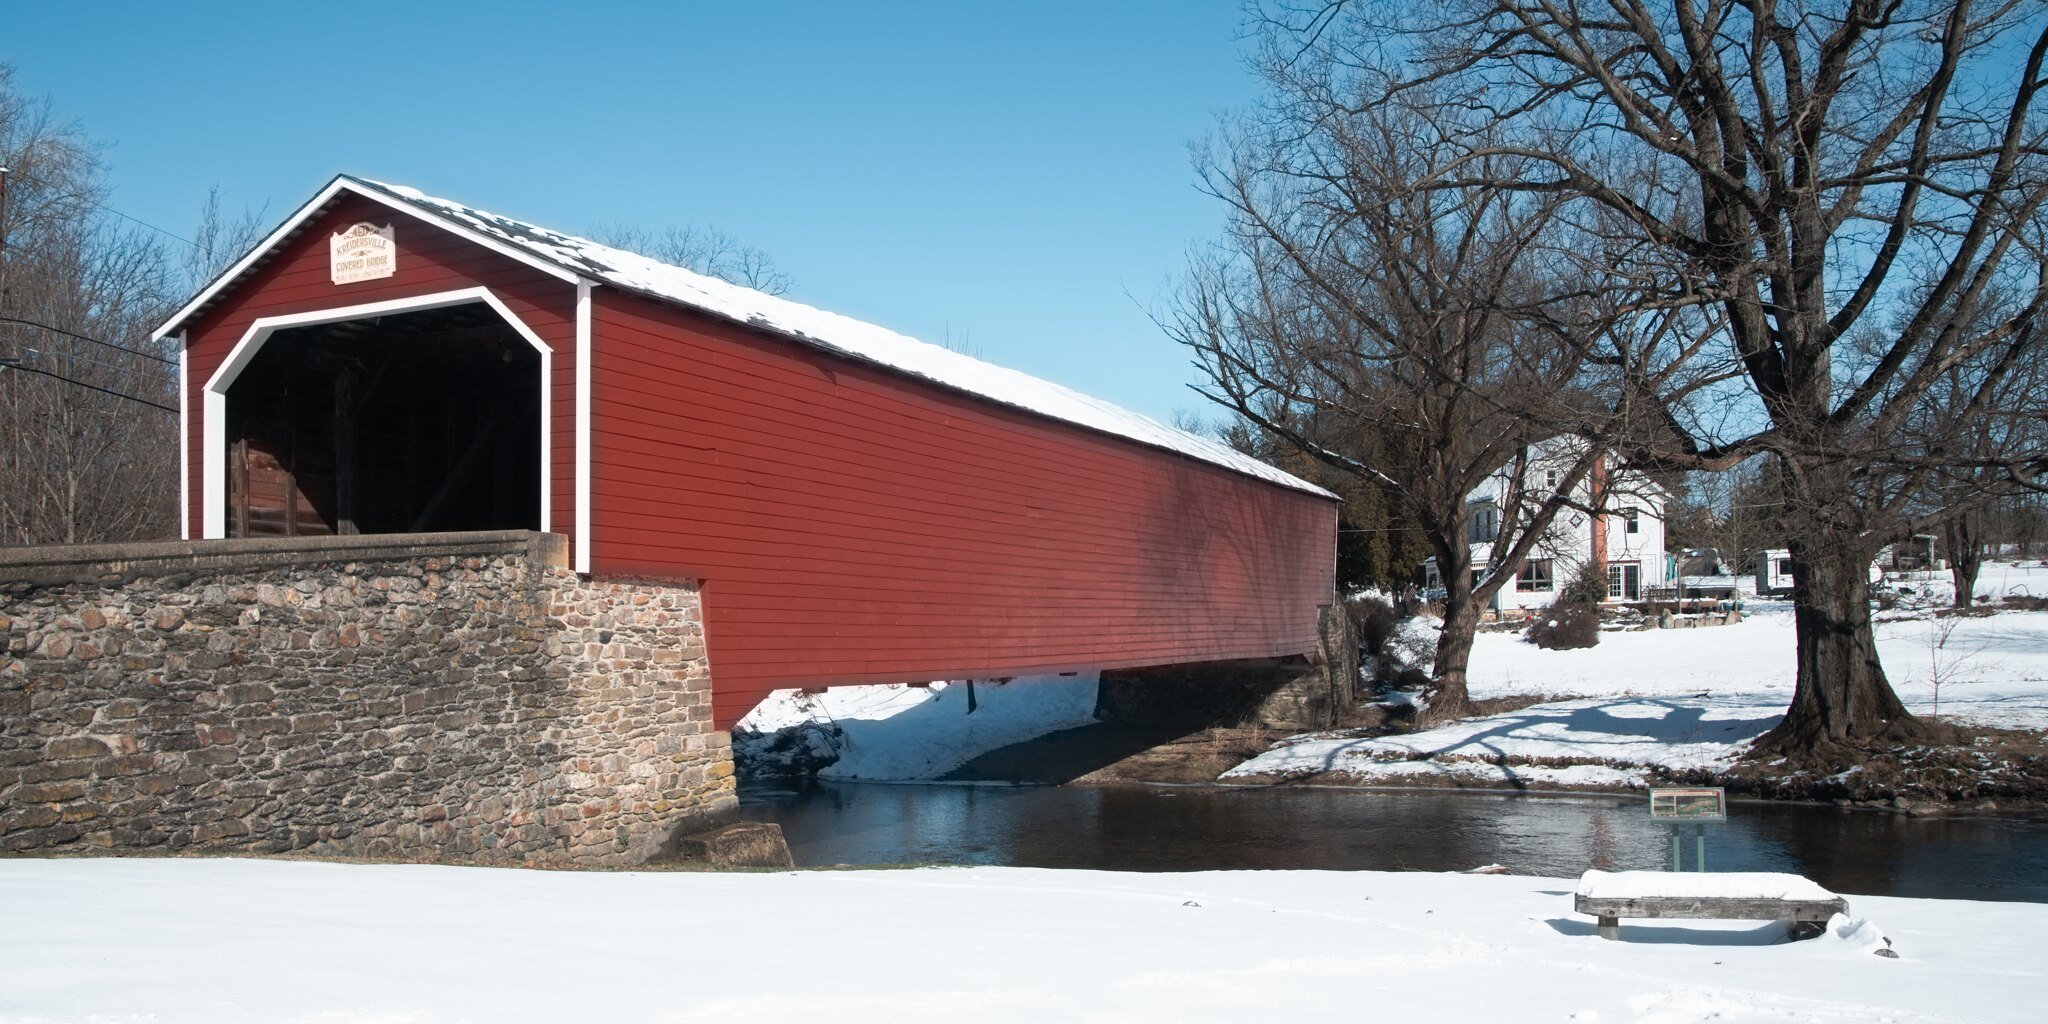  Kreidersville Covered Bridge, Northampton County, PA.  Built in 1839.  